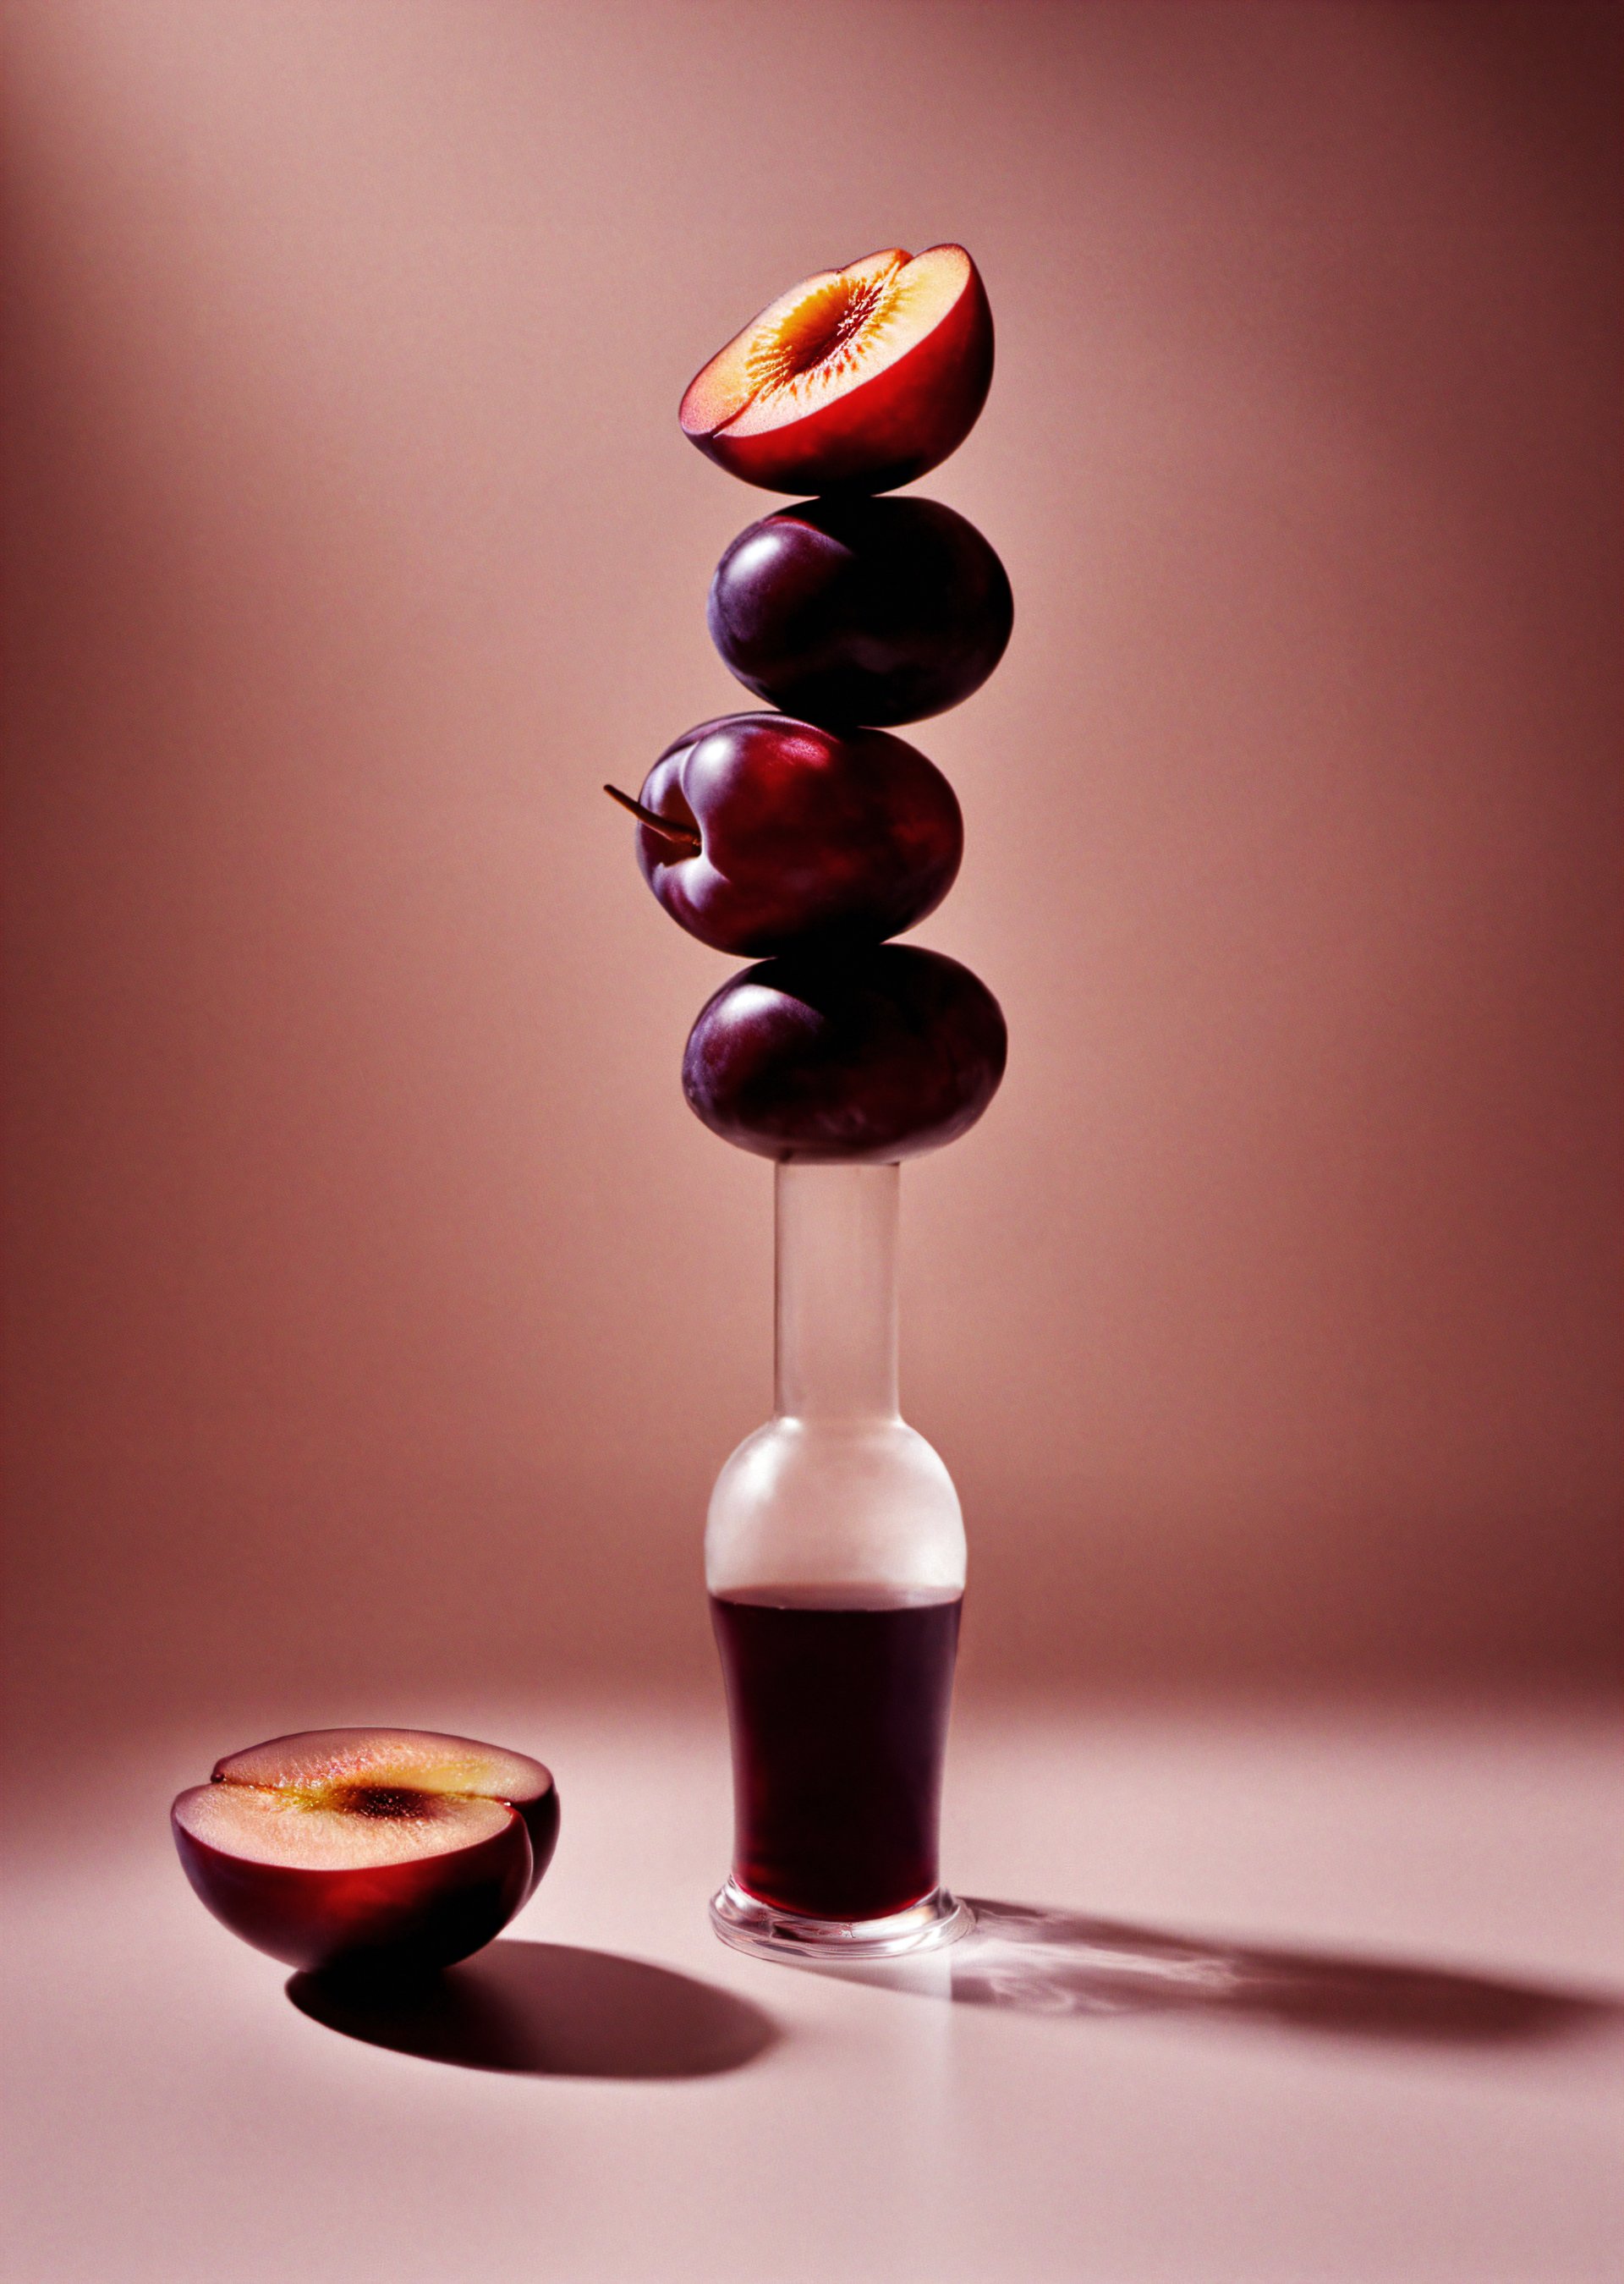 Balanced plums stack